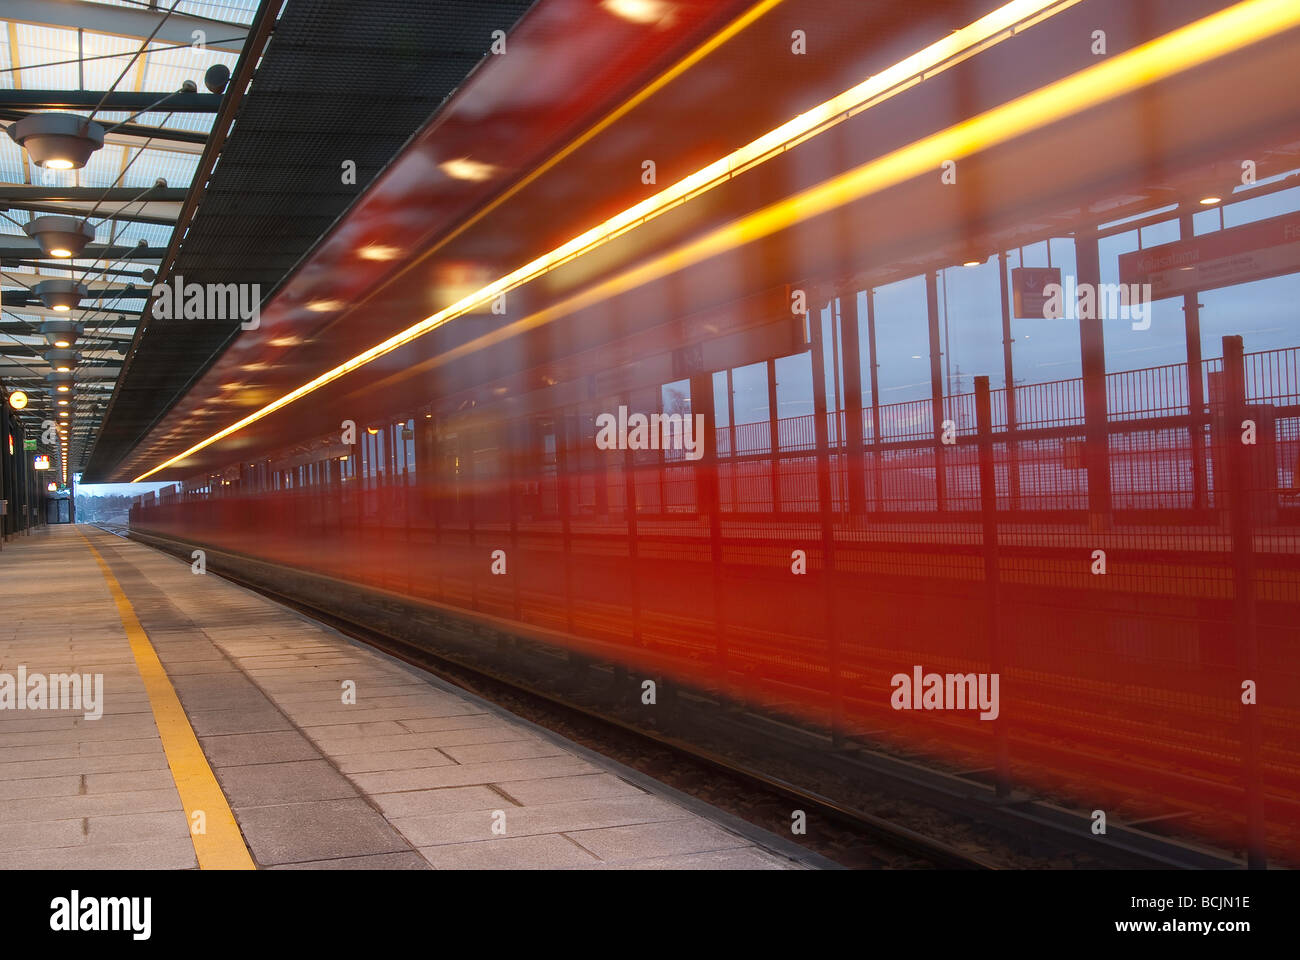 Red subway train speeding through a subway station Stock Photo